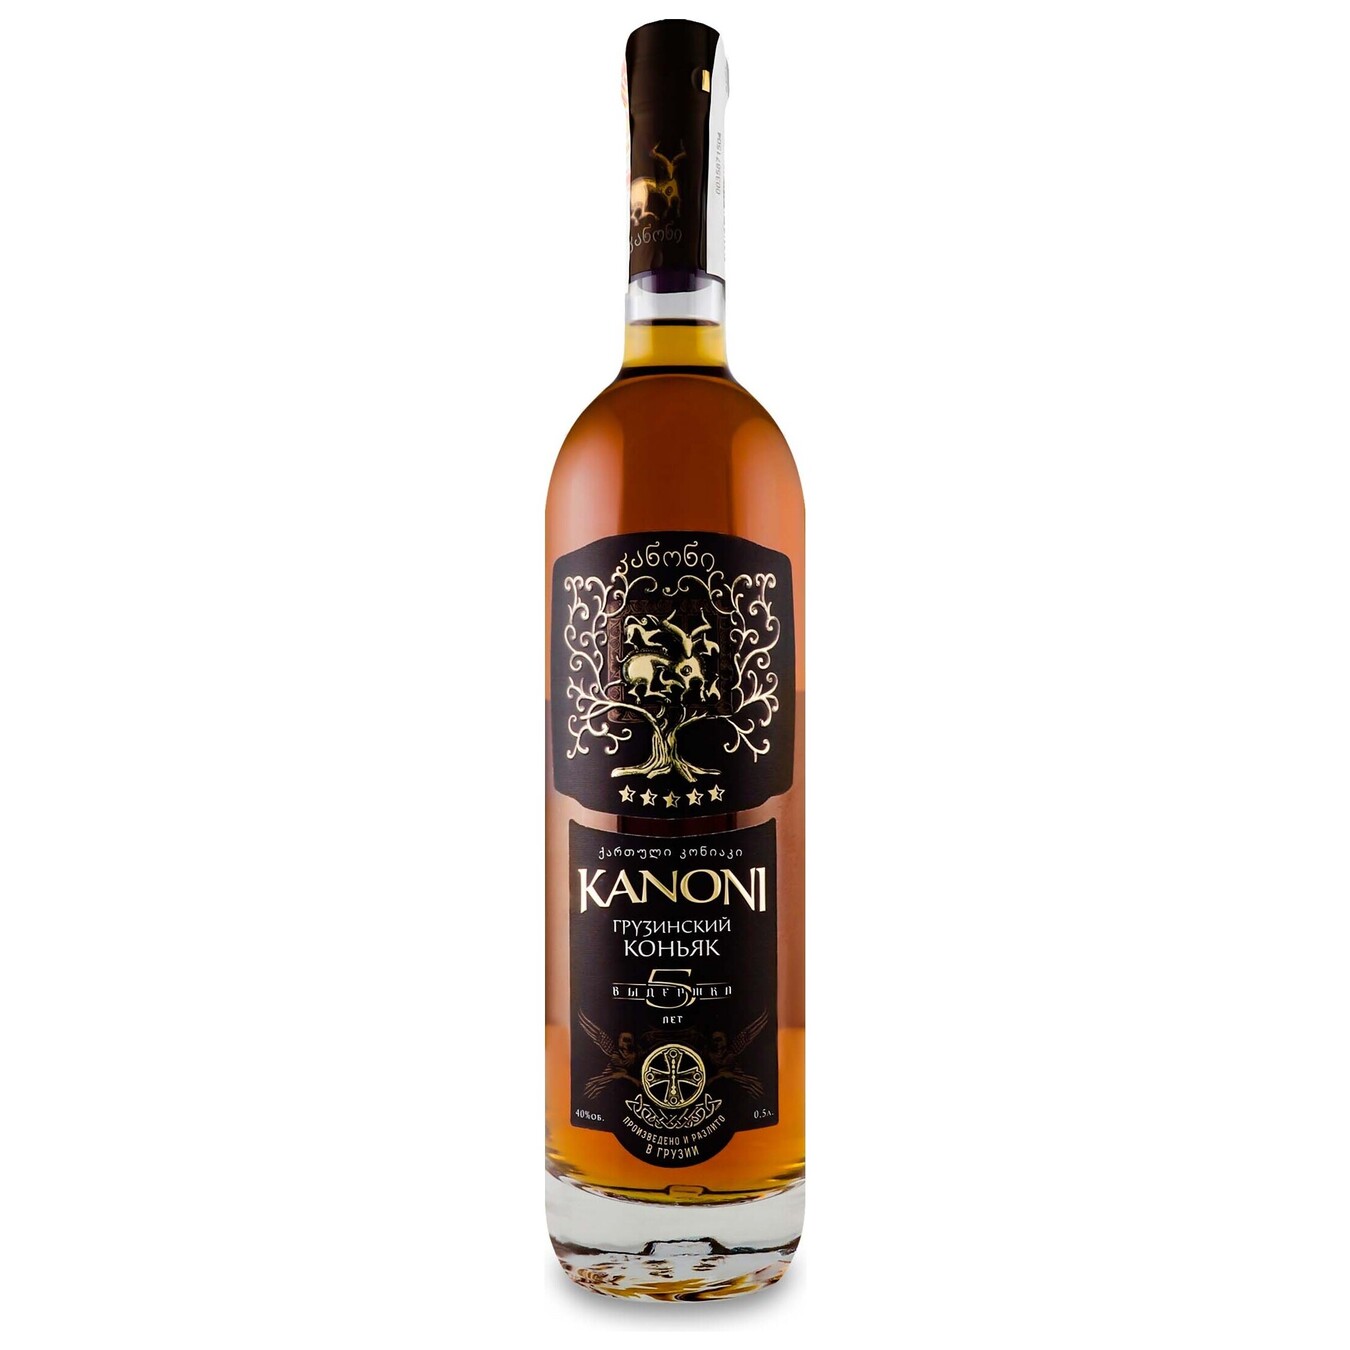 Kanoni Georgian cognac 5 years 0,4 0.5 l